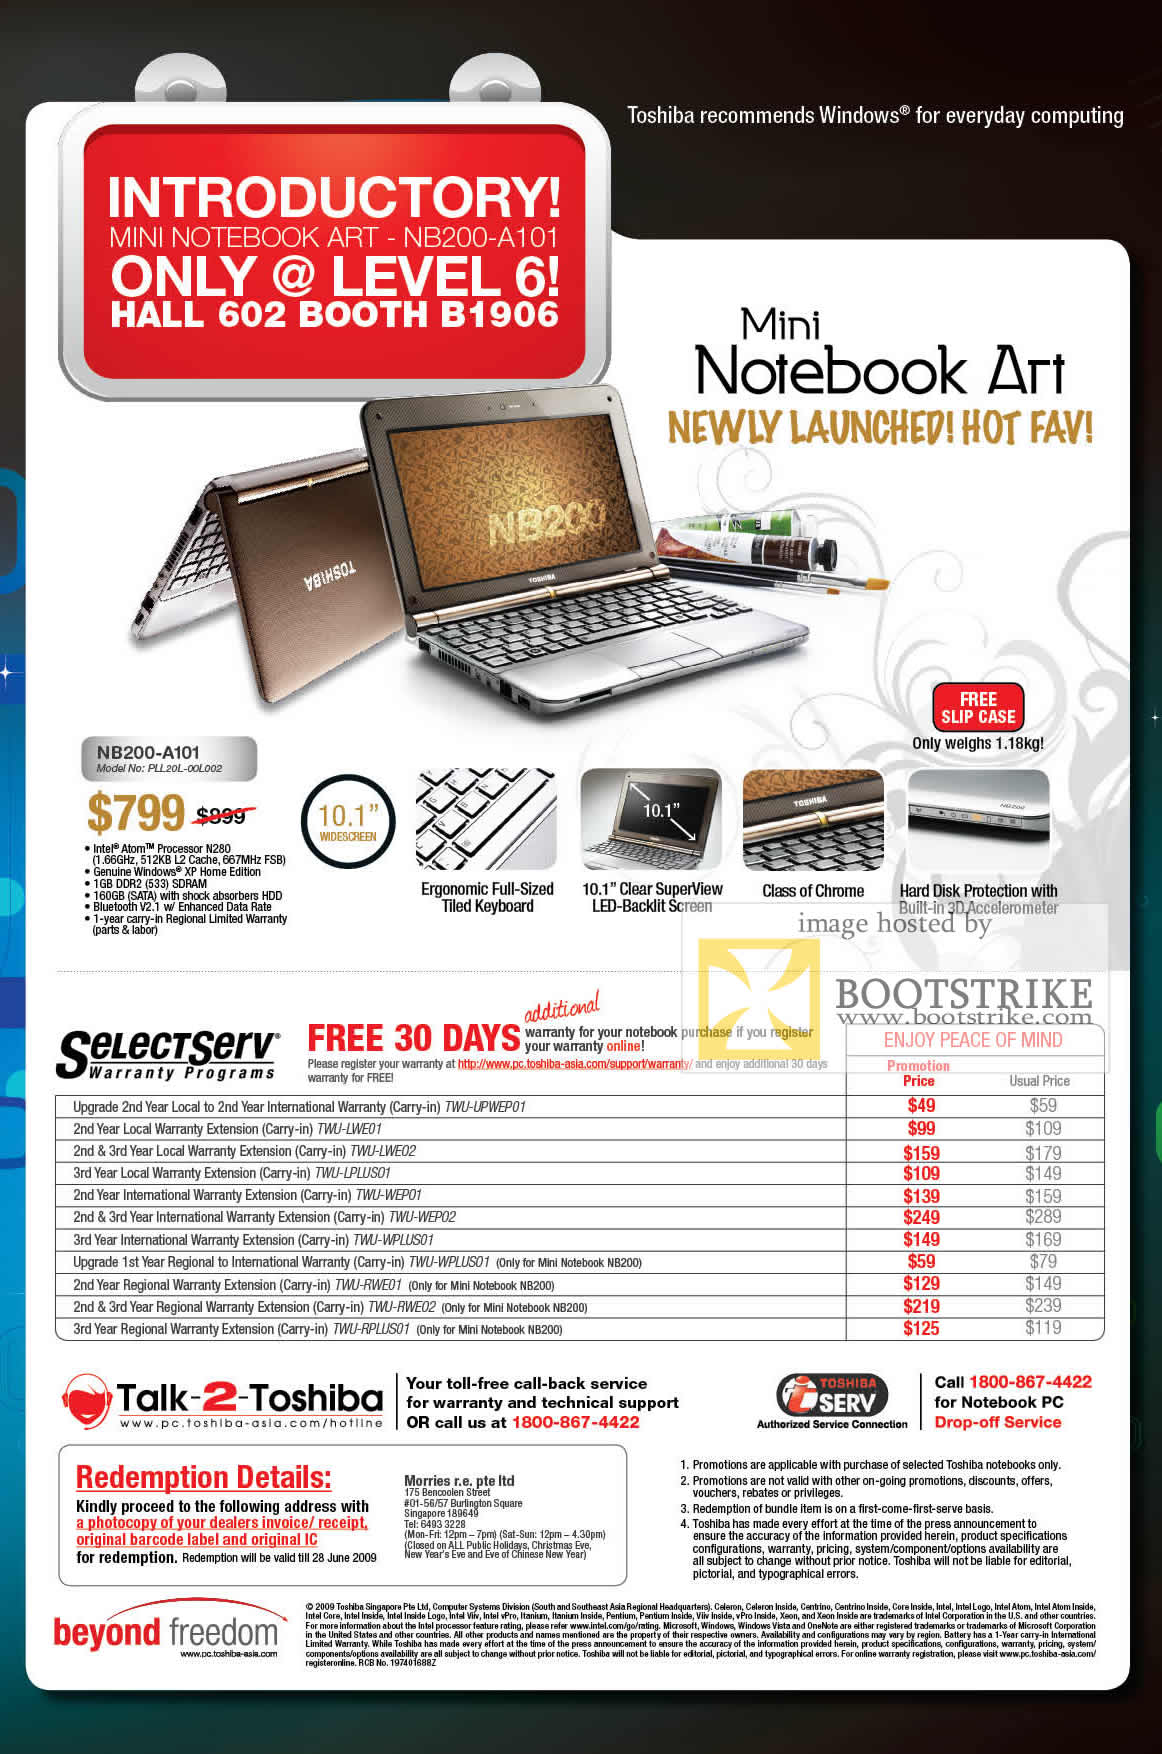 PC Show 2009 price list image brochure of Toshiba Mini Notebook Art NB200-A101